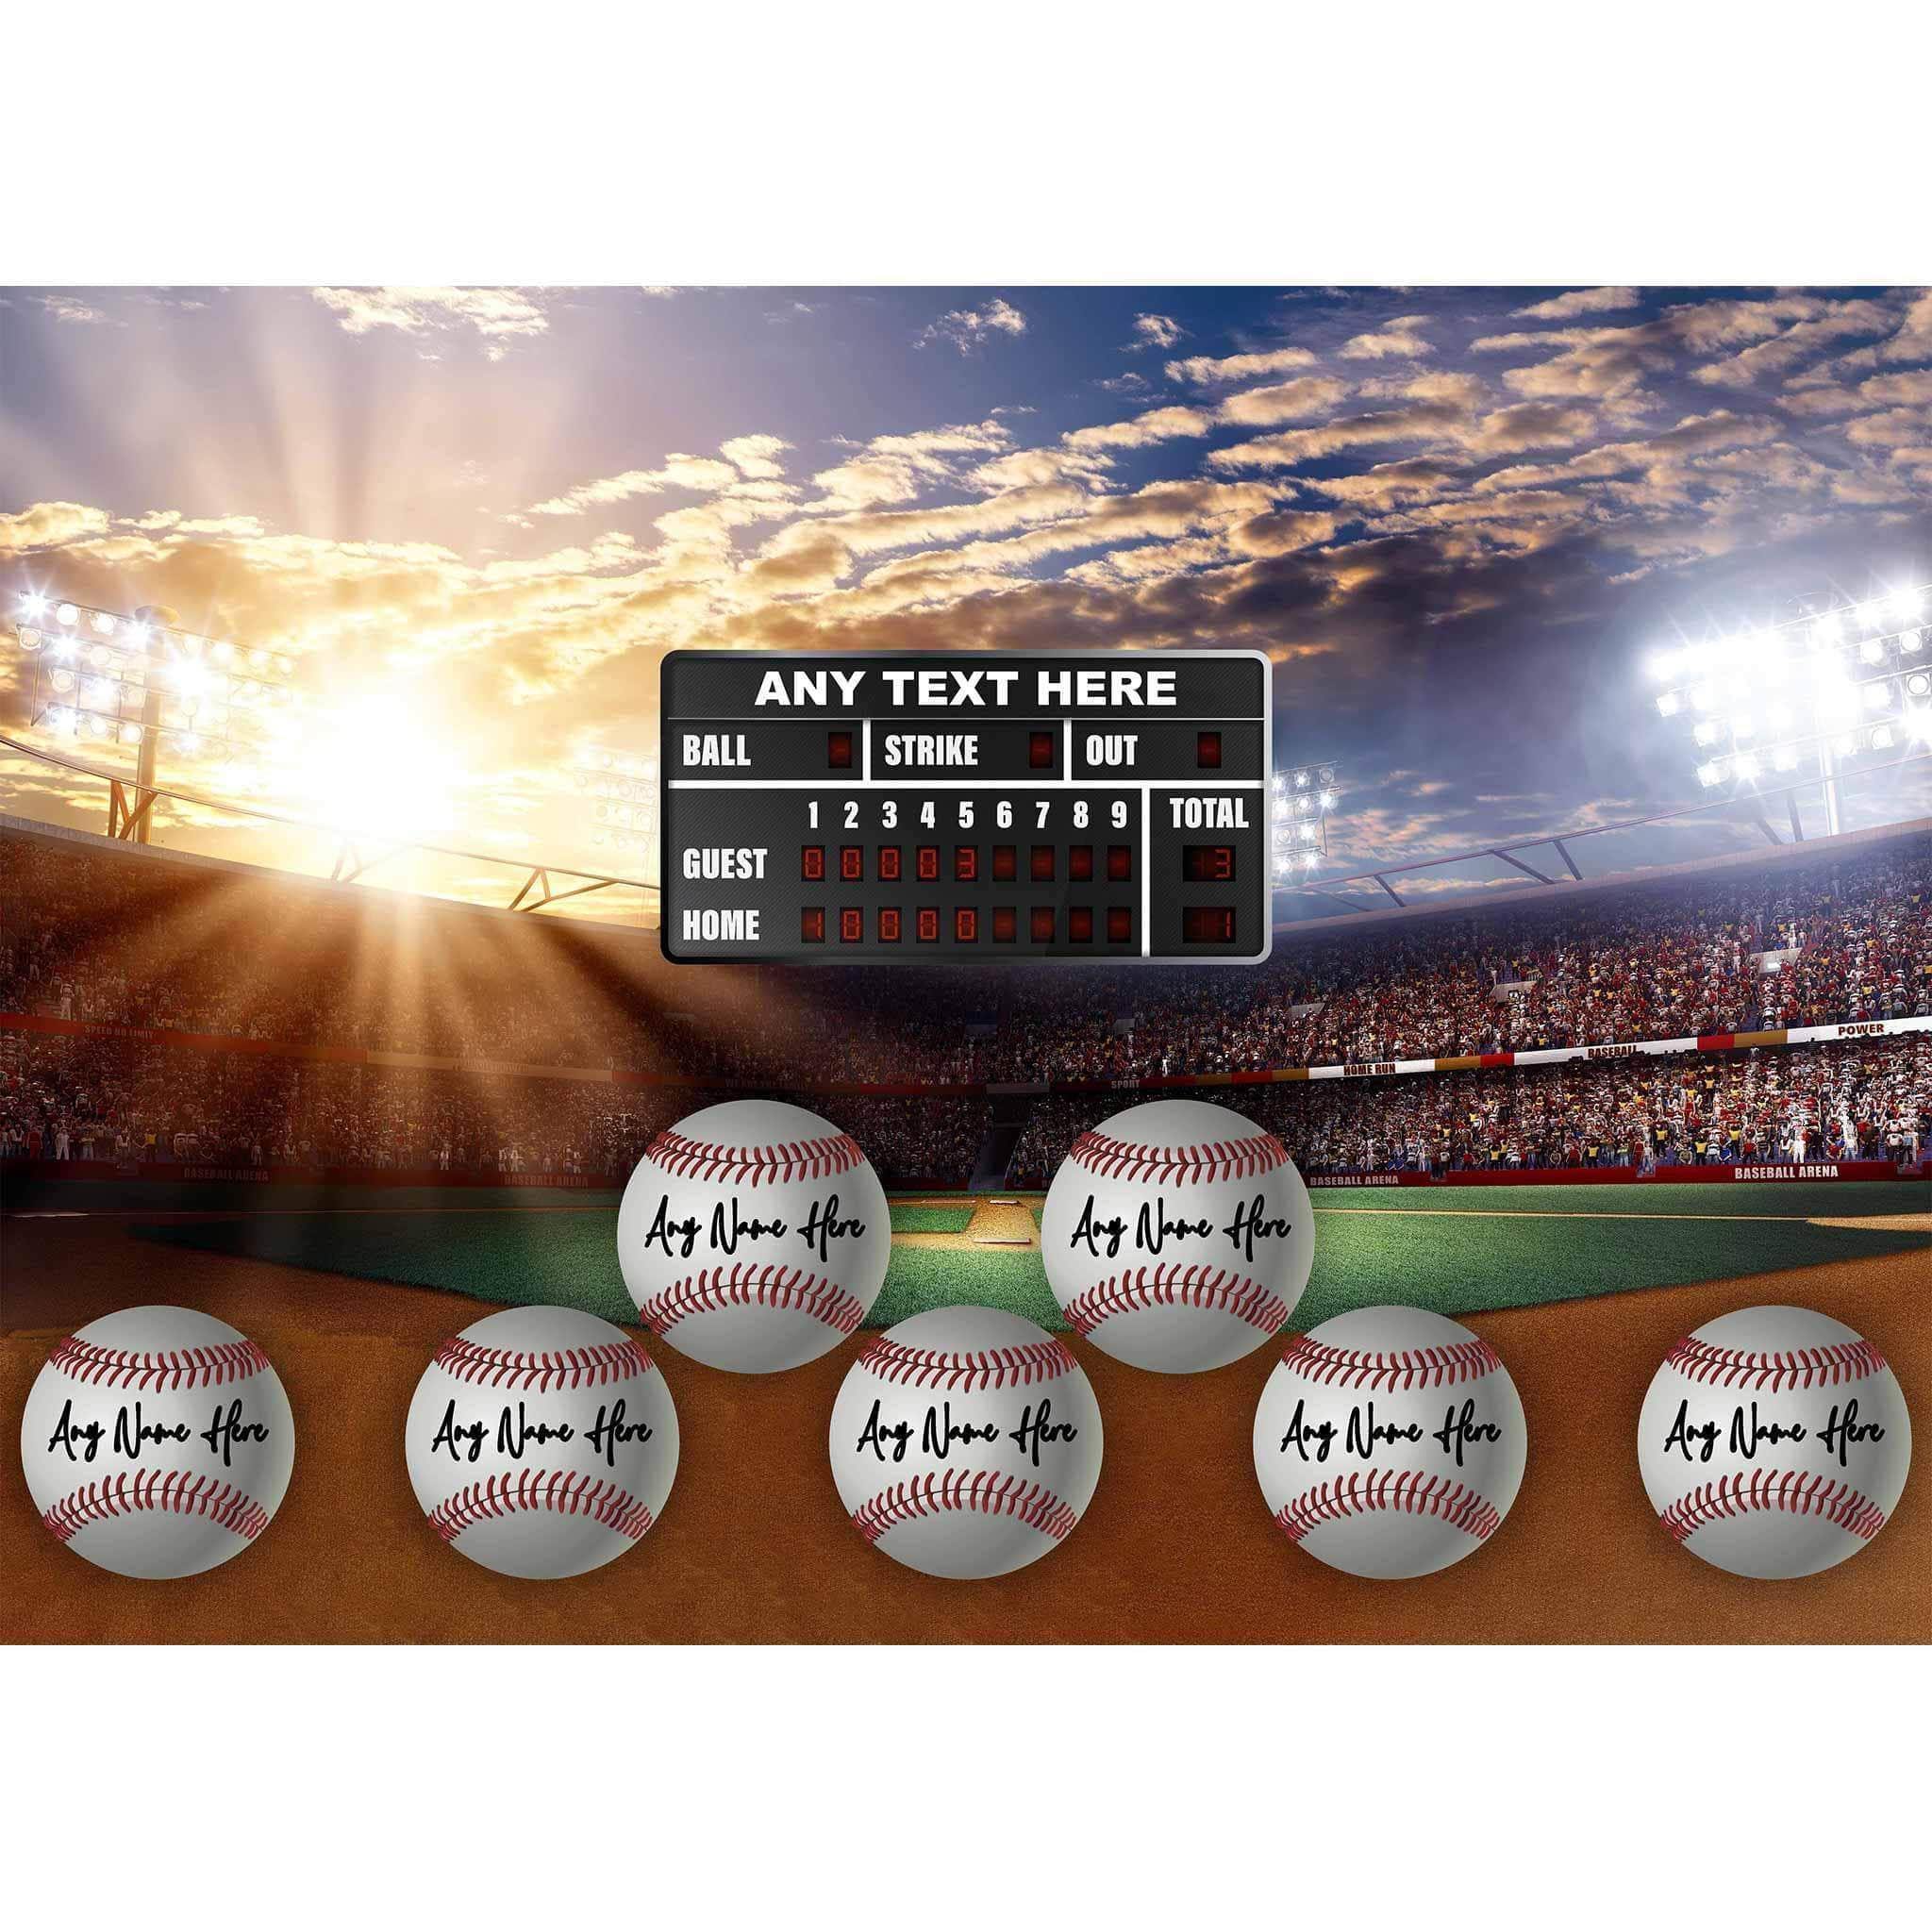 Baseball Stadium V1 Multiple Names Personalized Baseballs And Scoreboard Sign CanvasCustomly Gifts